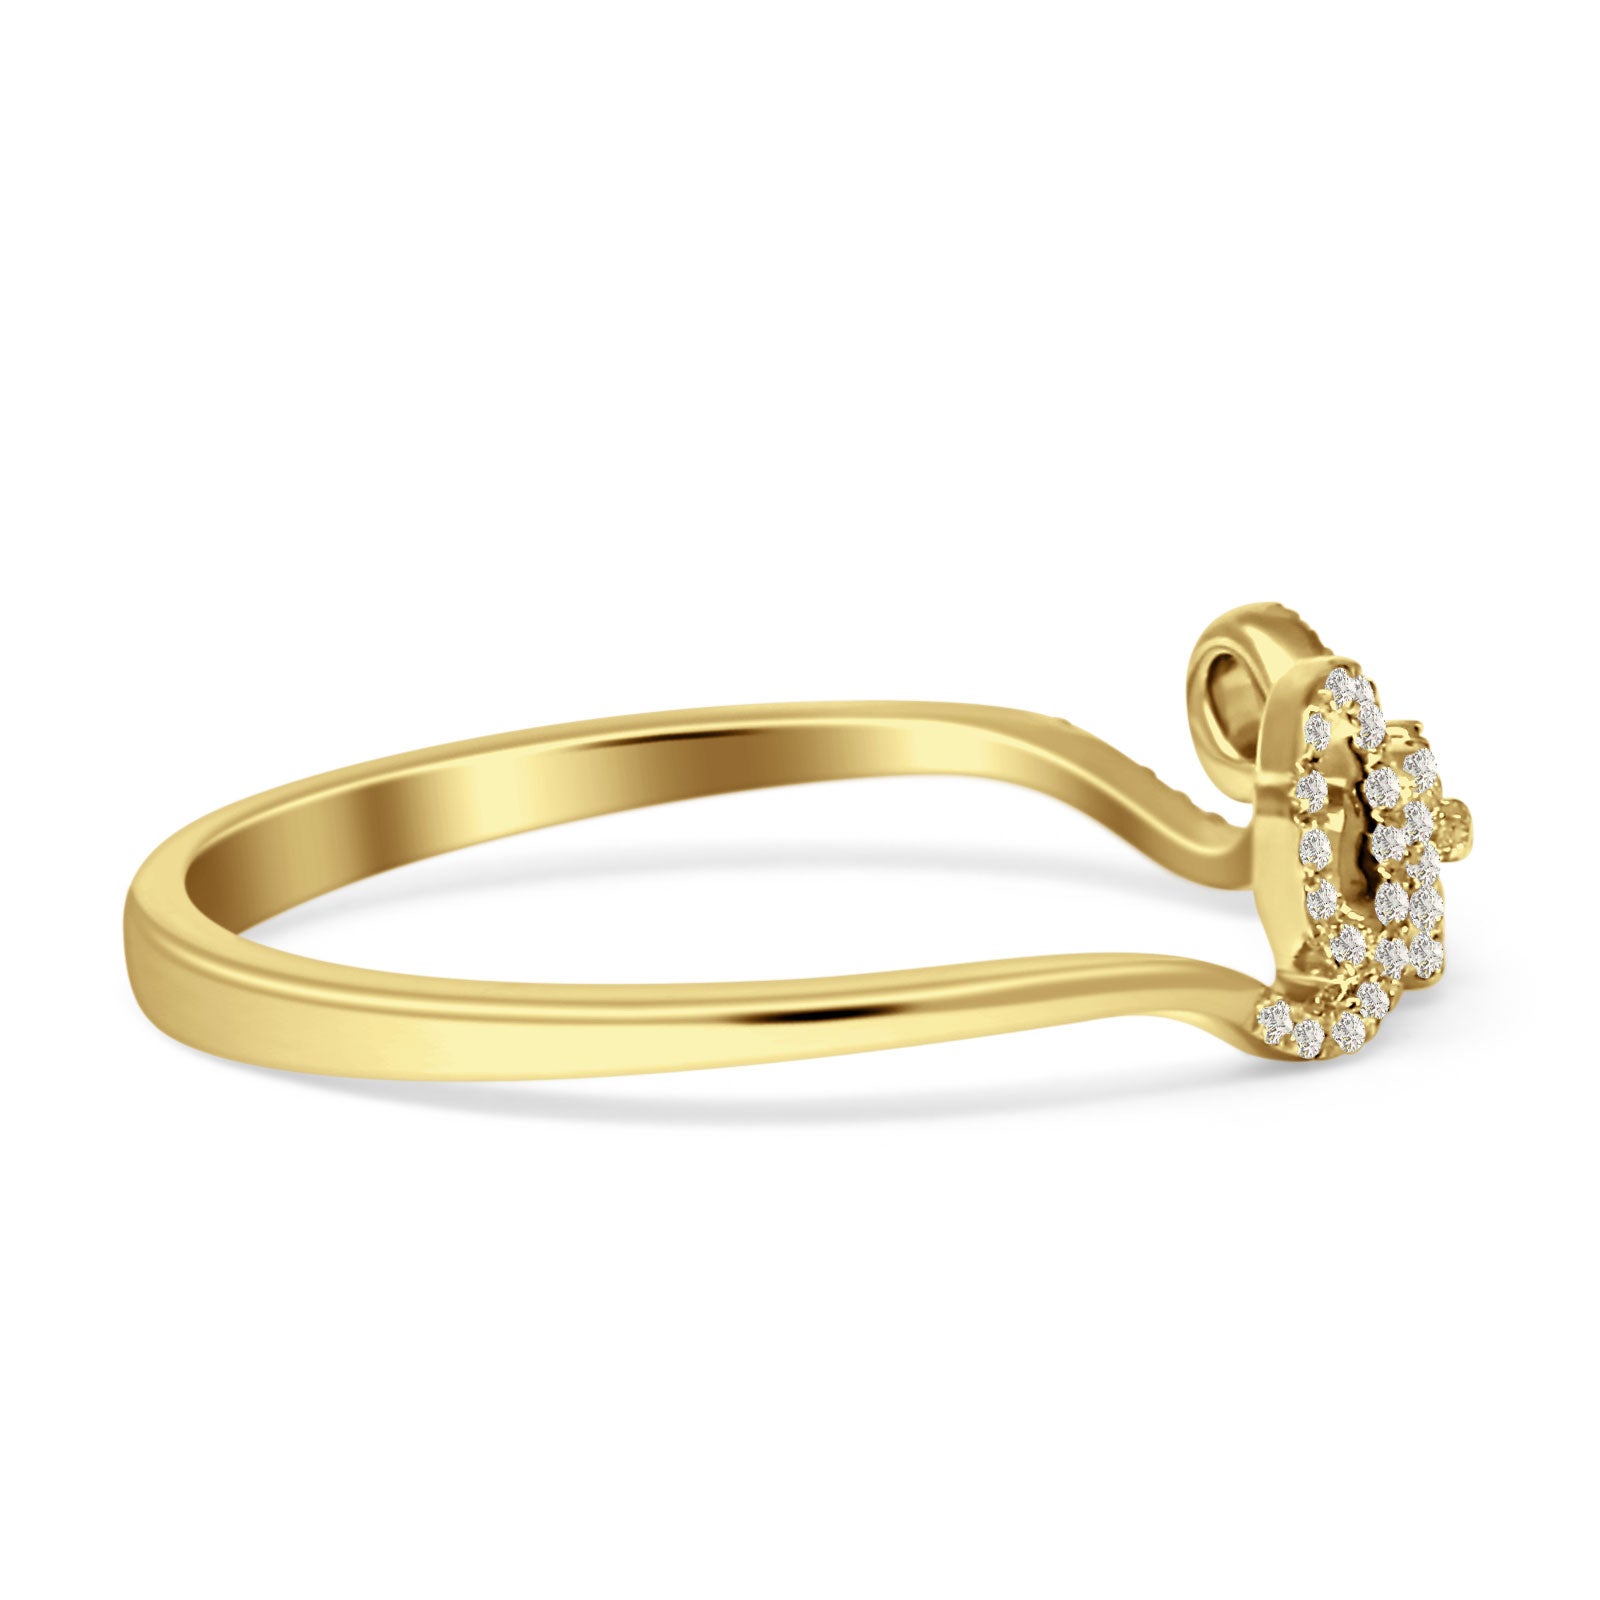 14K Gold Jewelry 0.13ct Heart Script Love Round Diamond Engagement Ring